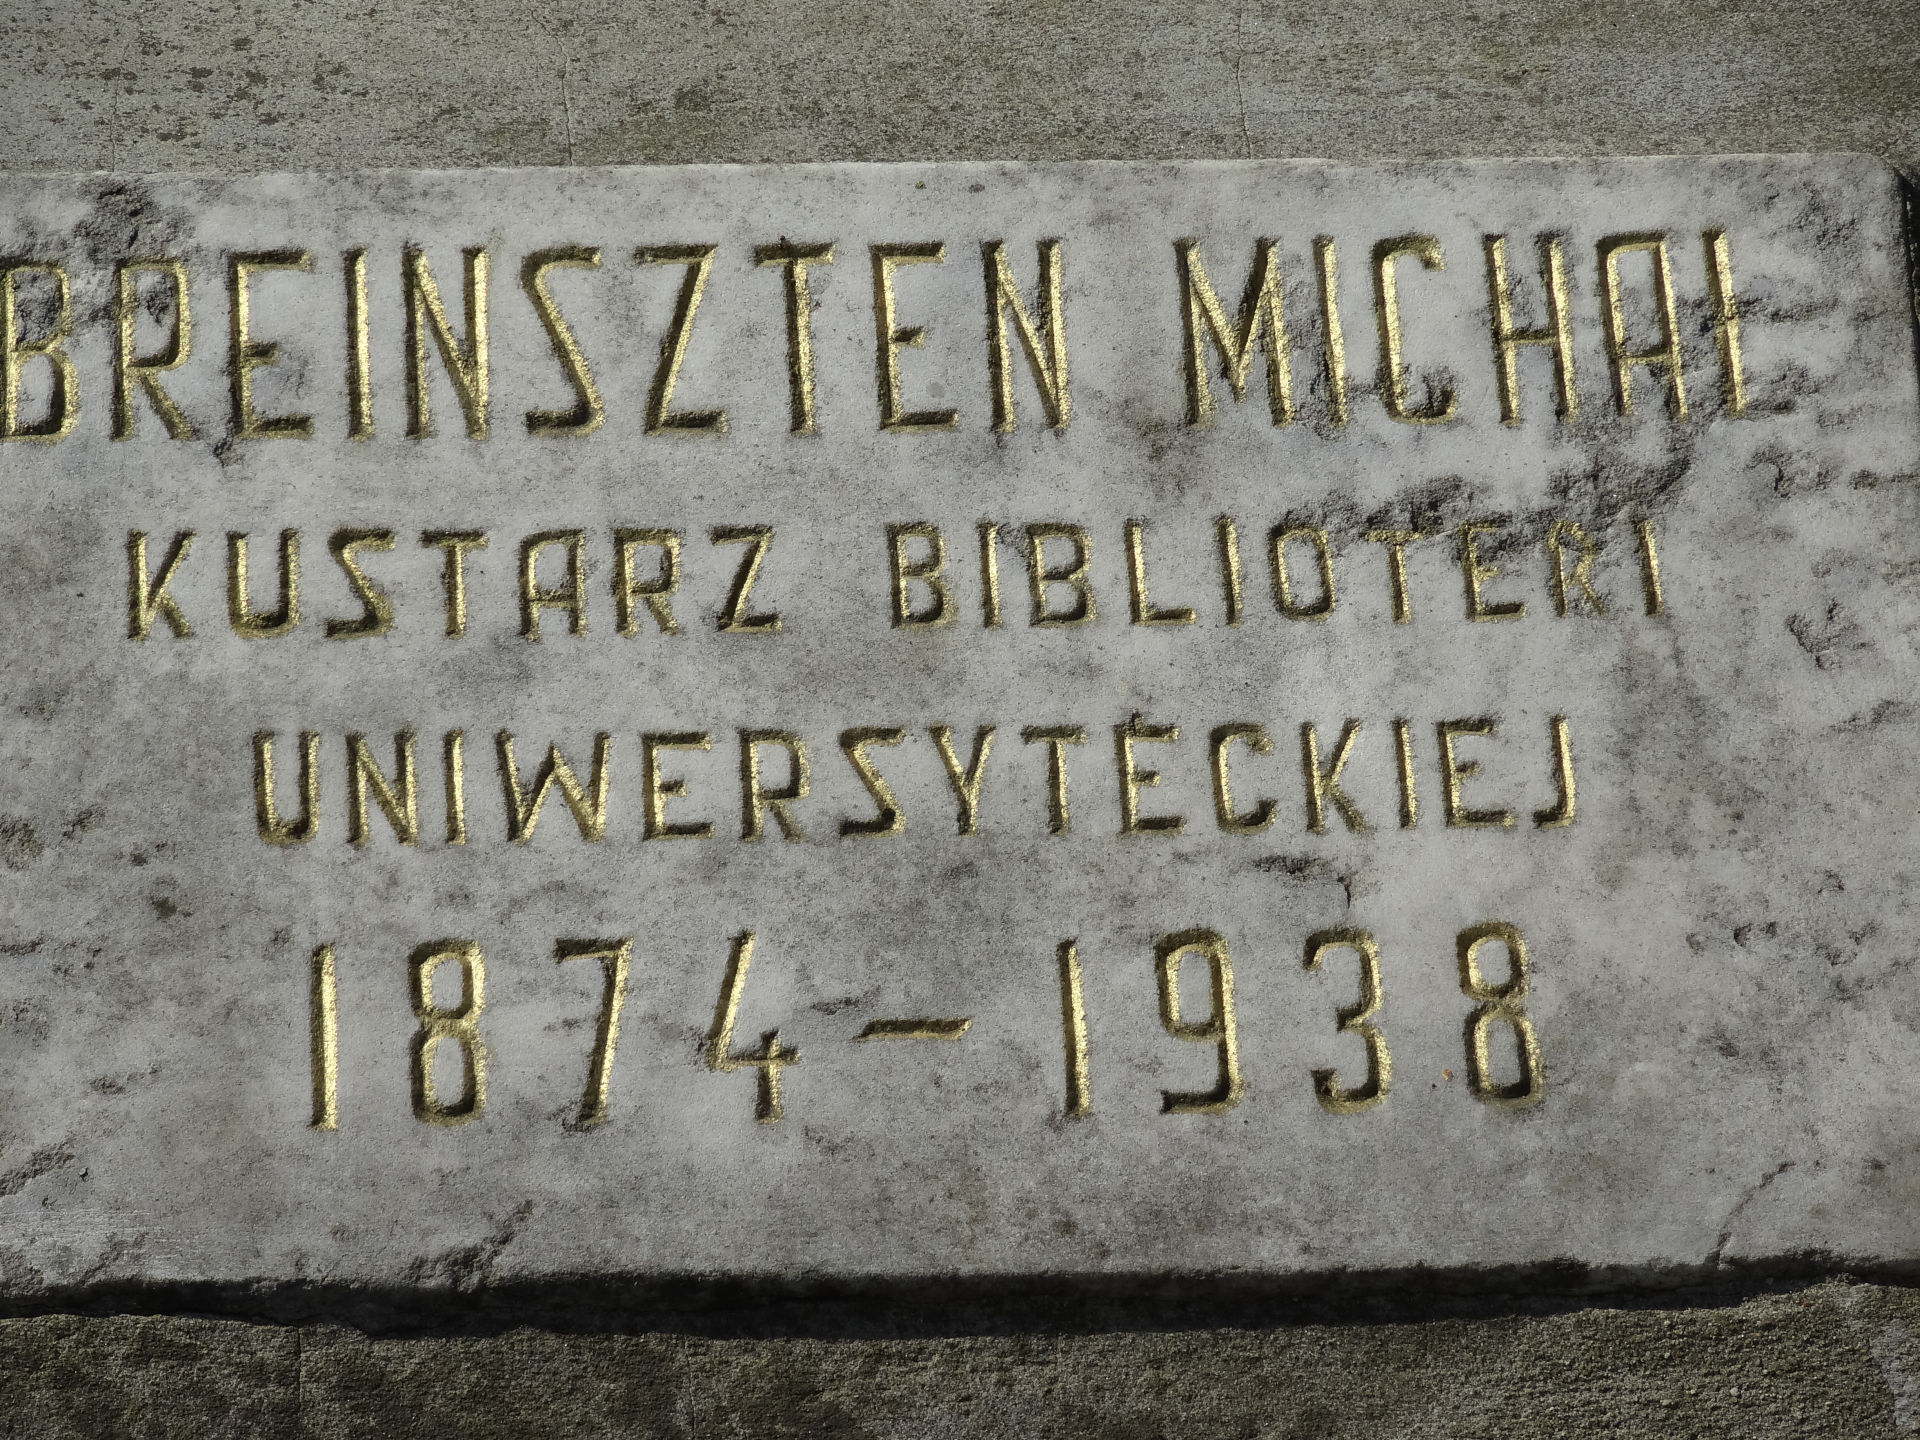 Brejsztejn's gravestone at the Bernardinian Cemetery